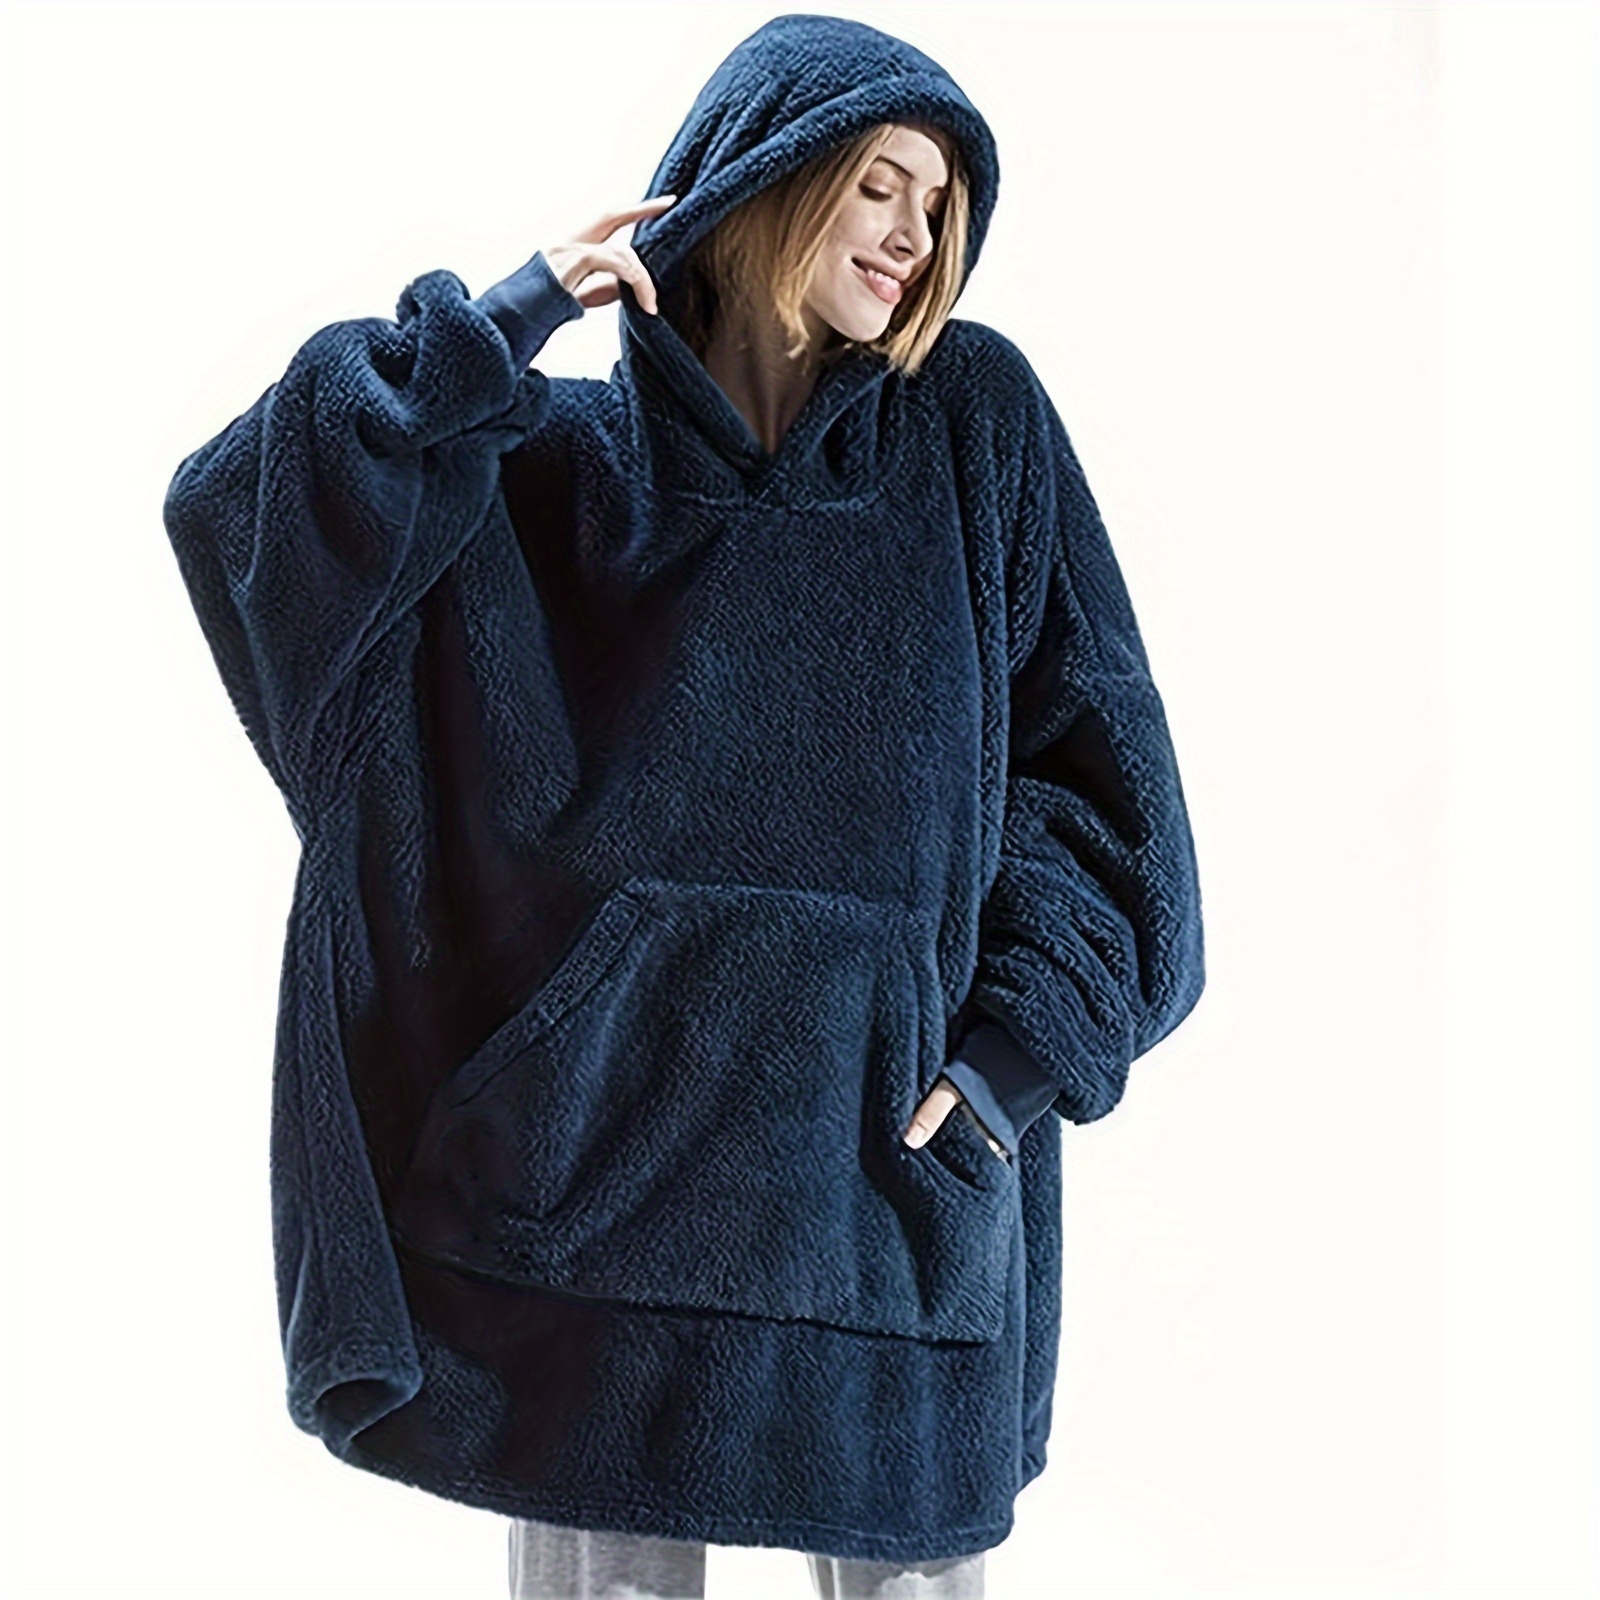 BLANKET HOODIE WITH Zipper Flannel Wearable Blanket Warm Cozy Blanket NuOJA  $56.32 - PicClick AU